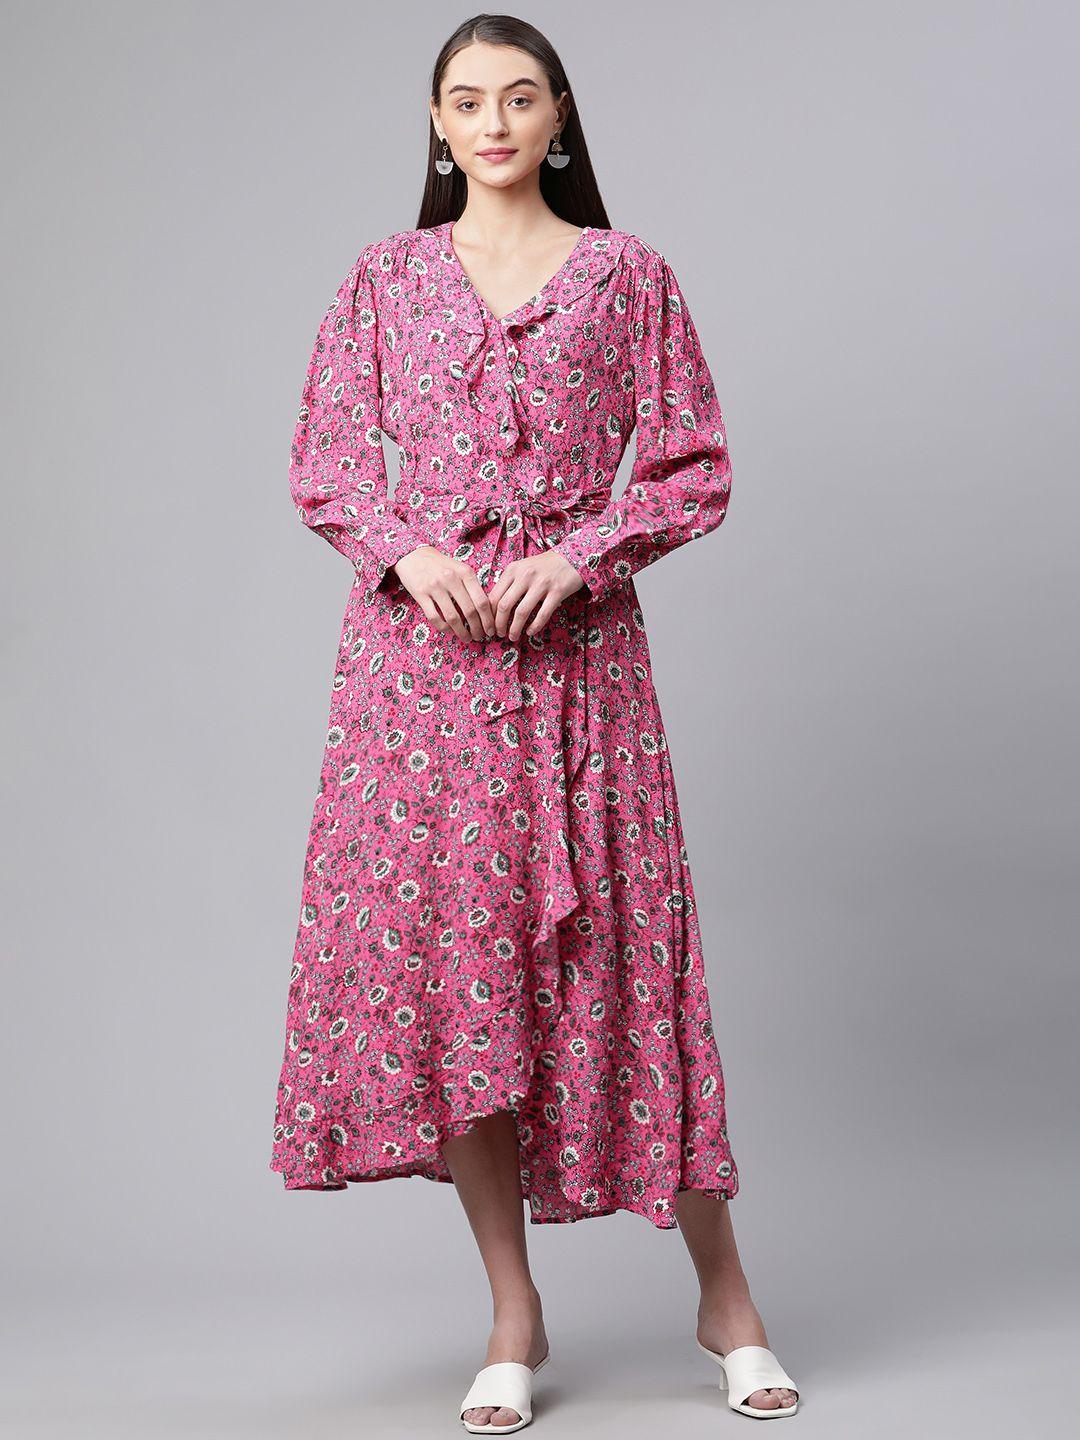 marks & spencer pink & white ethnic motifs midi dress